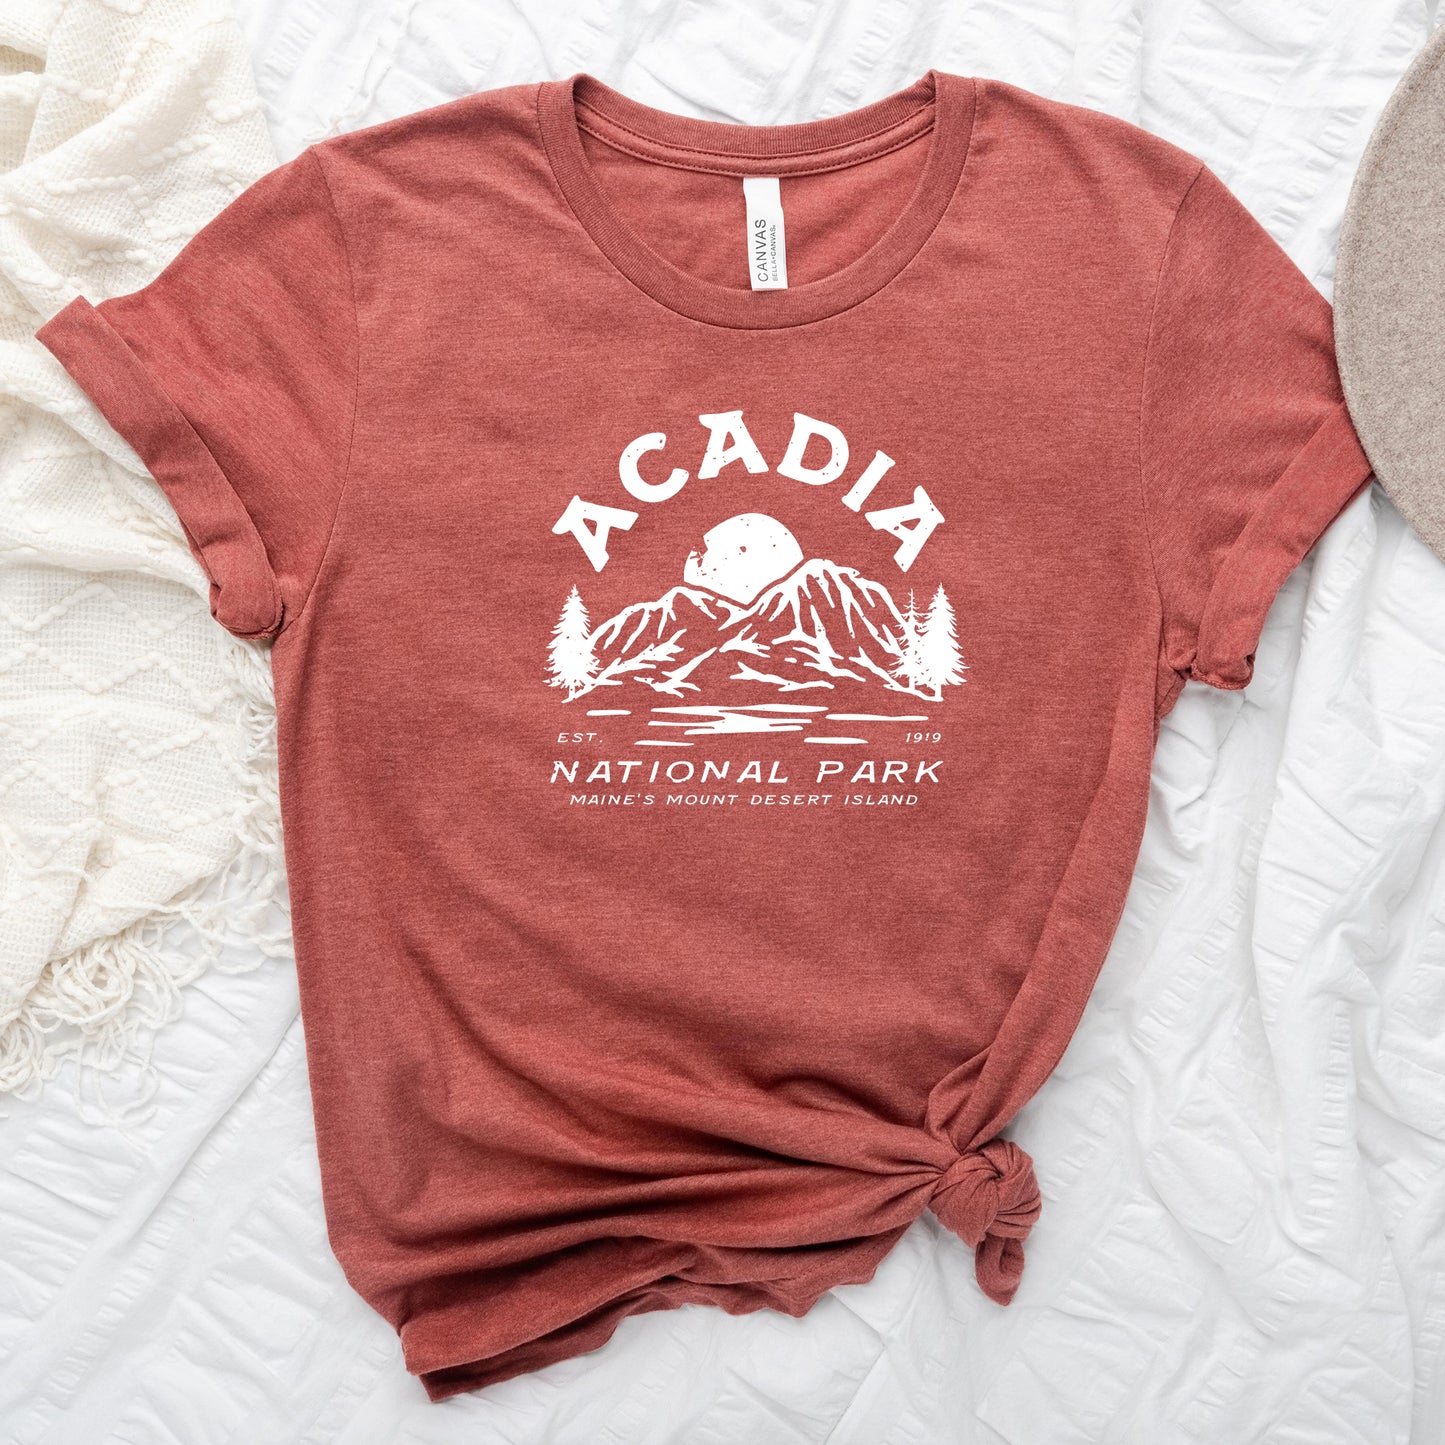 Vintage Acadia National Park | Short Sleeve Graphic Tee